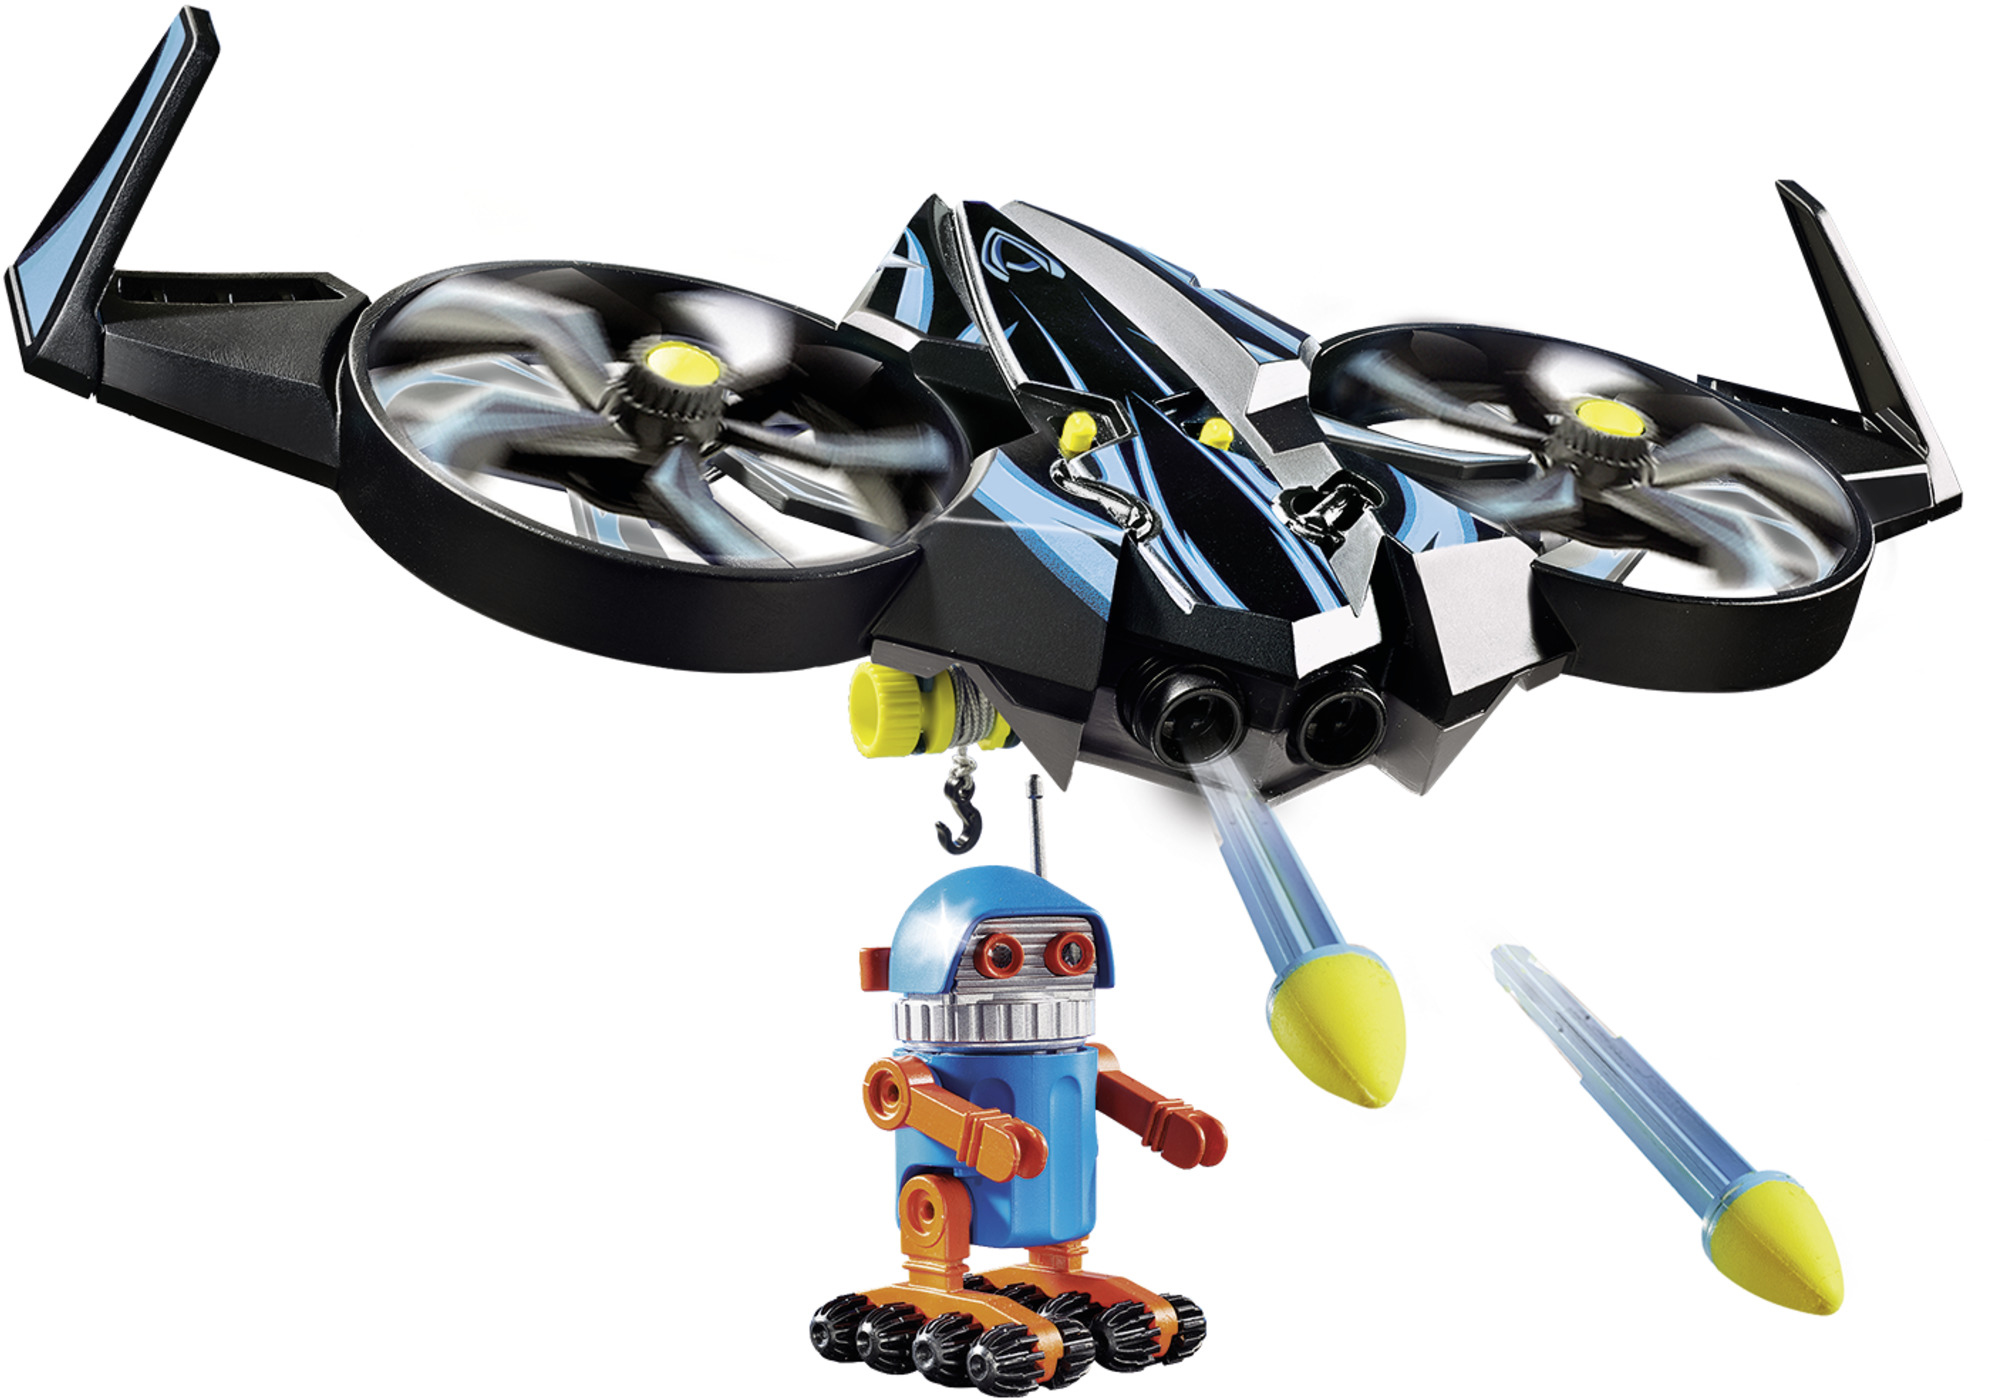 PLAYMOBIL THE MOVIE Robotitron with Drone - image 2 of 5